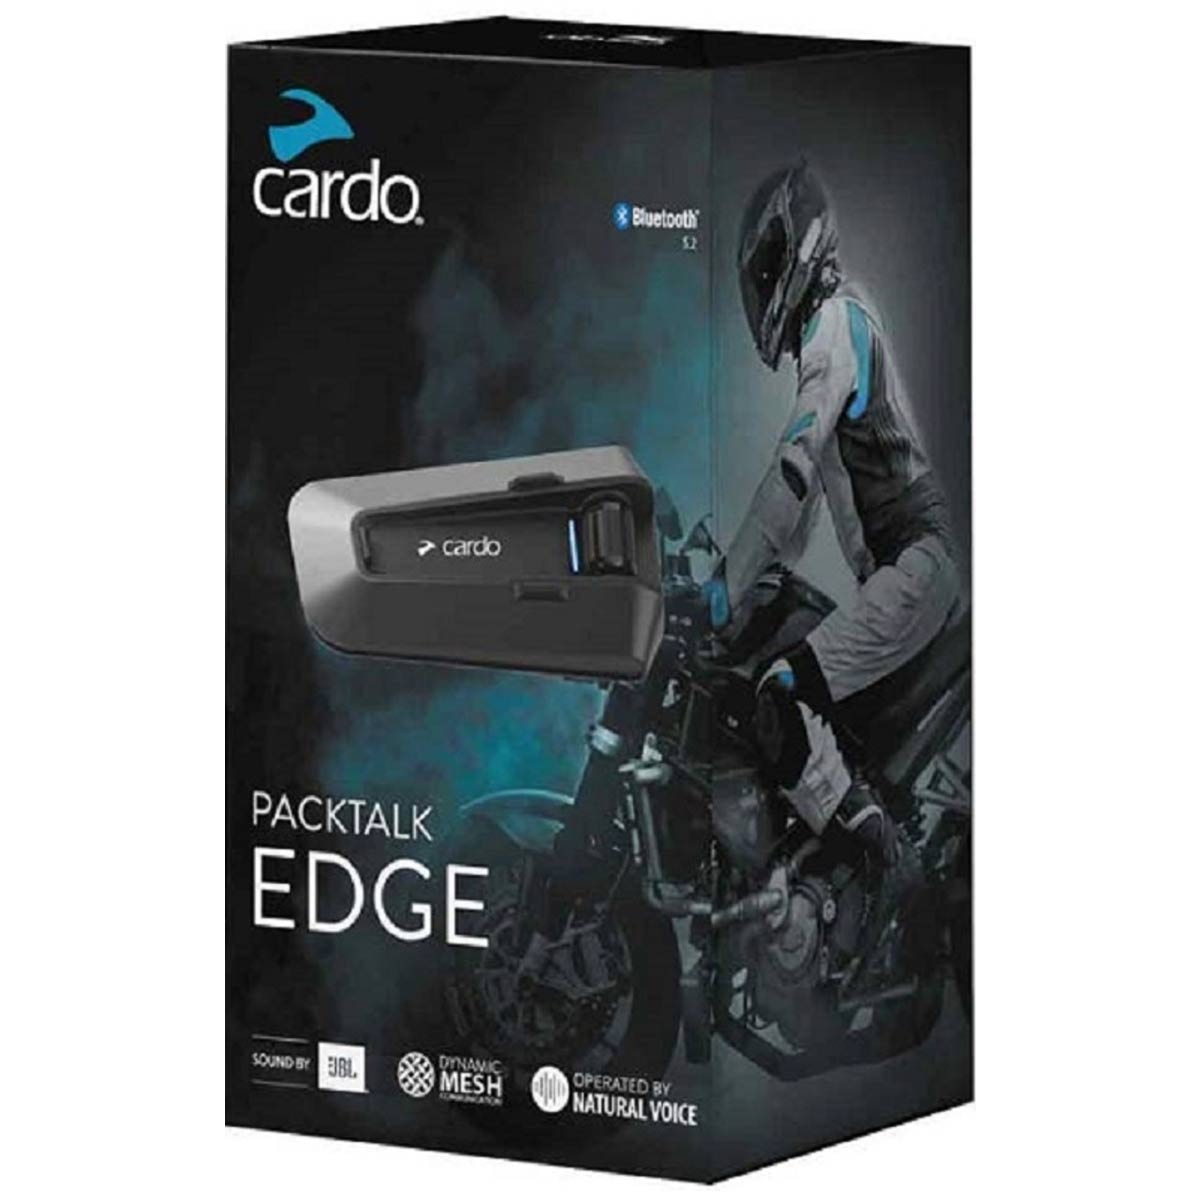 CARDO EDGE Bluetooth Communication